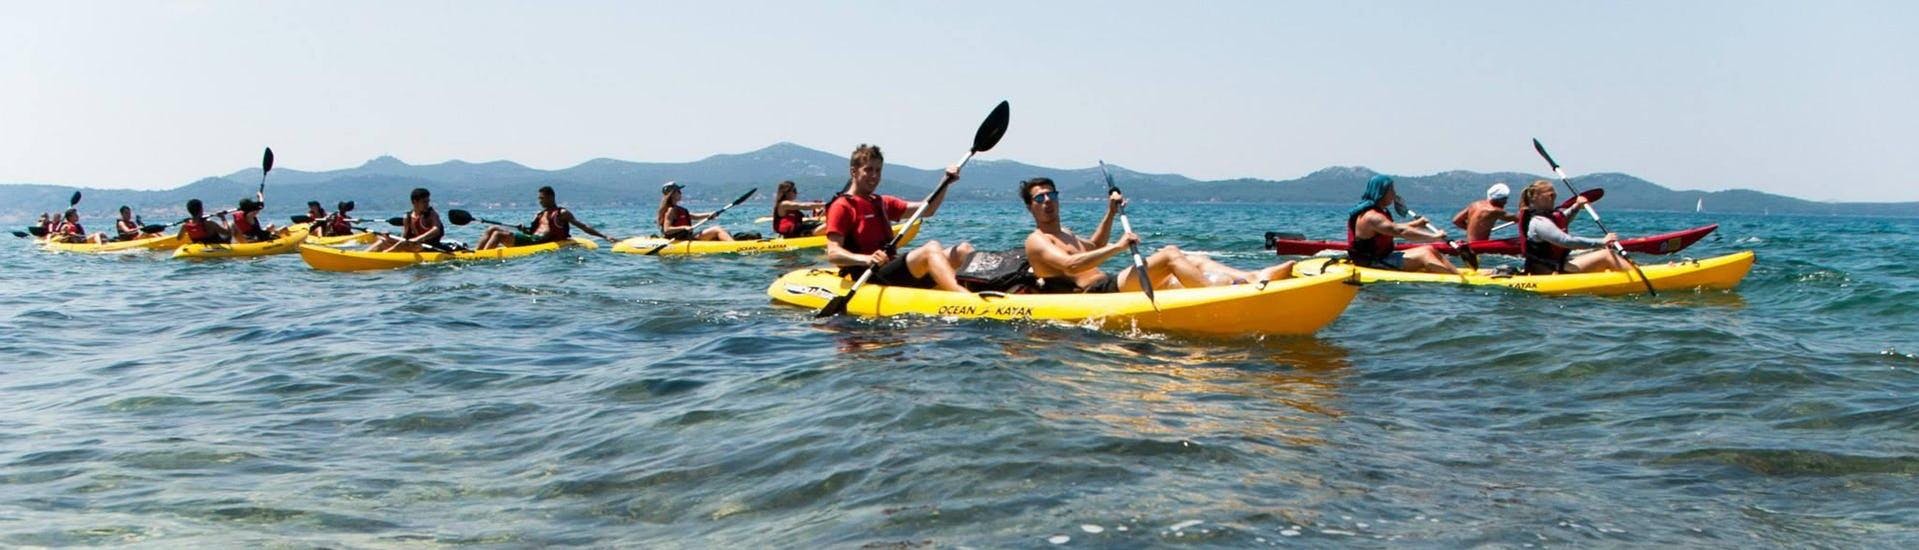 A group of kayaks during the Sea Kayaking in Zadar - Half Day Tour with Kayak & Bike Adventure Zadar.